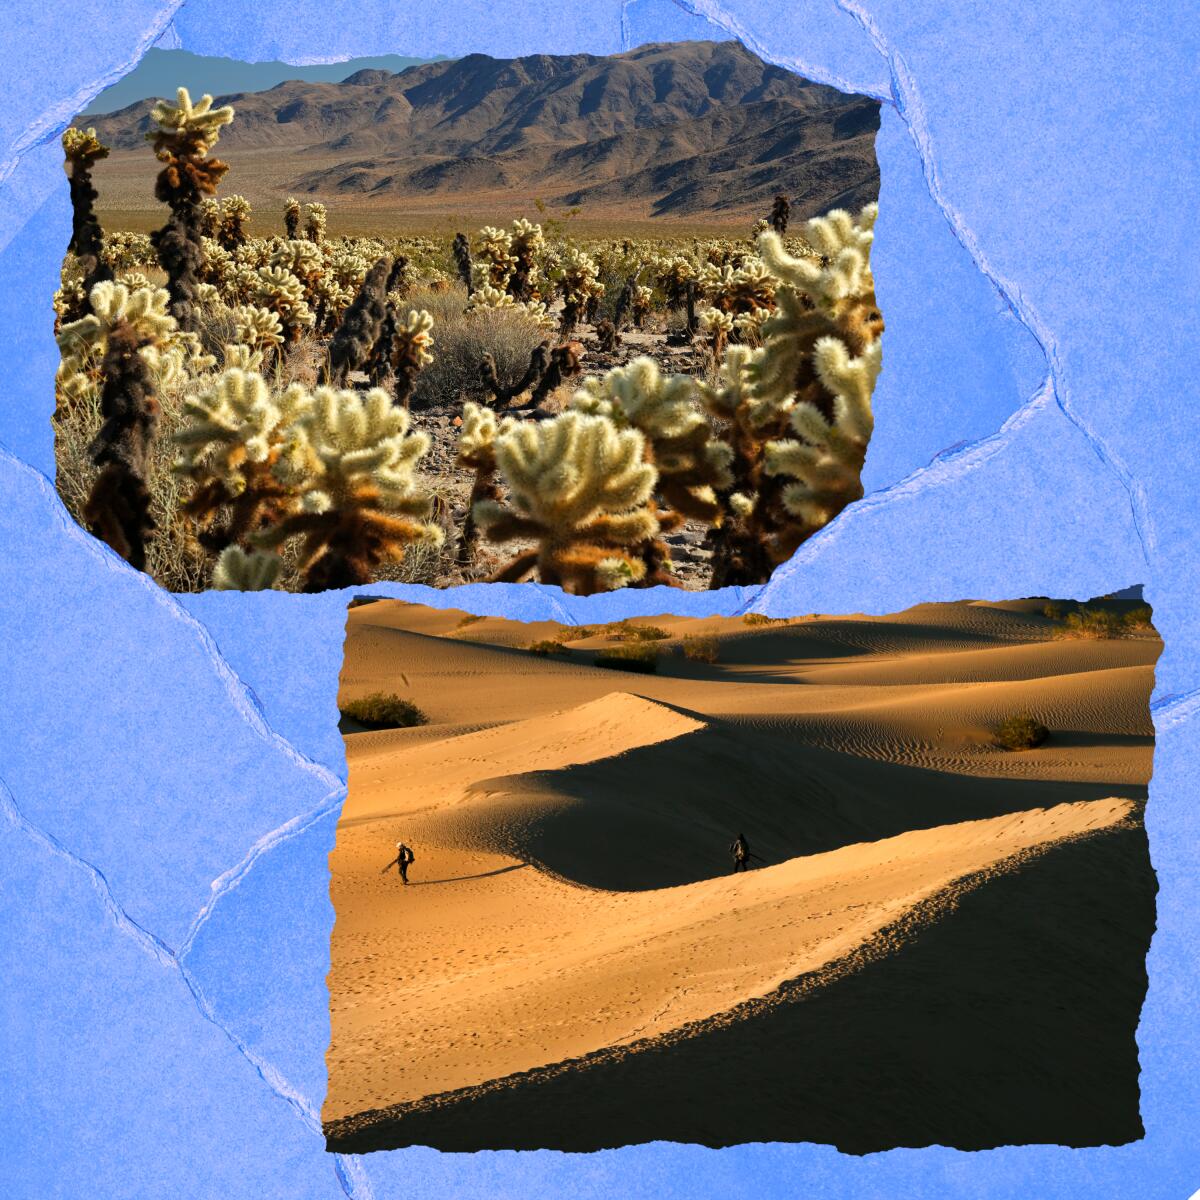 Cholla cactus at Joshua Tree National Park and sand dunes at Mesquite Flats at Death Valley National Park.